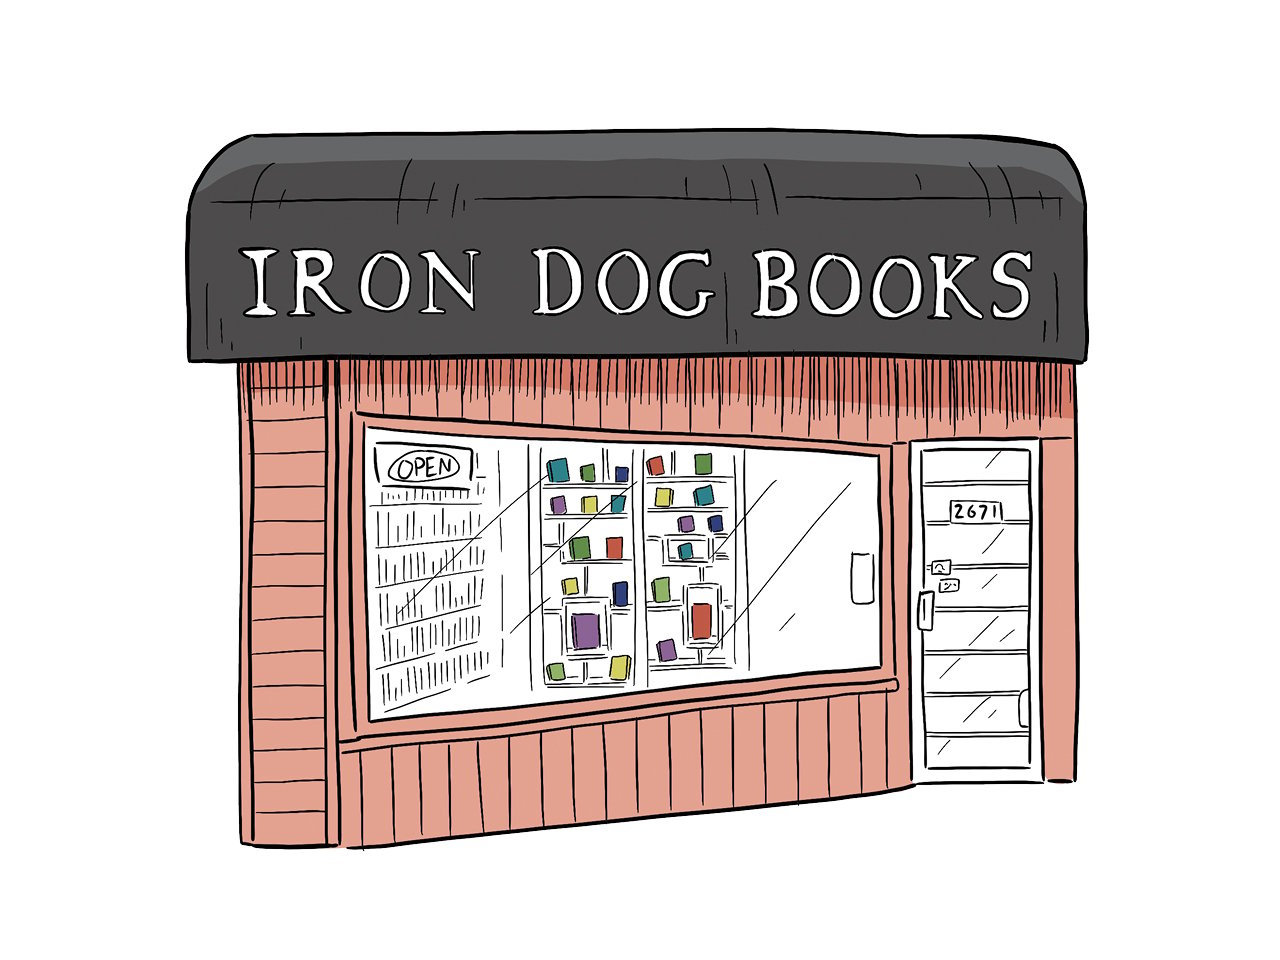 Iron Dog Books